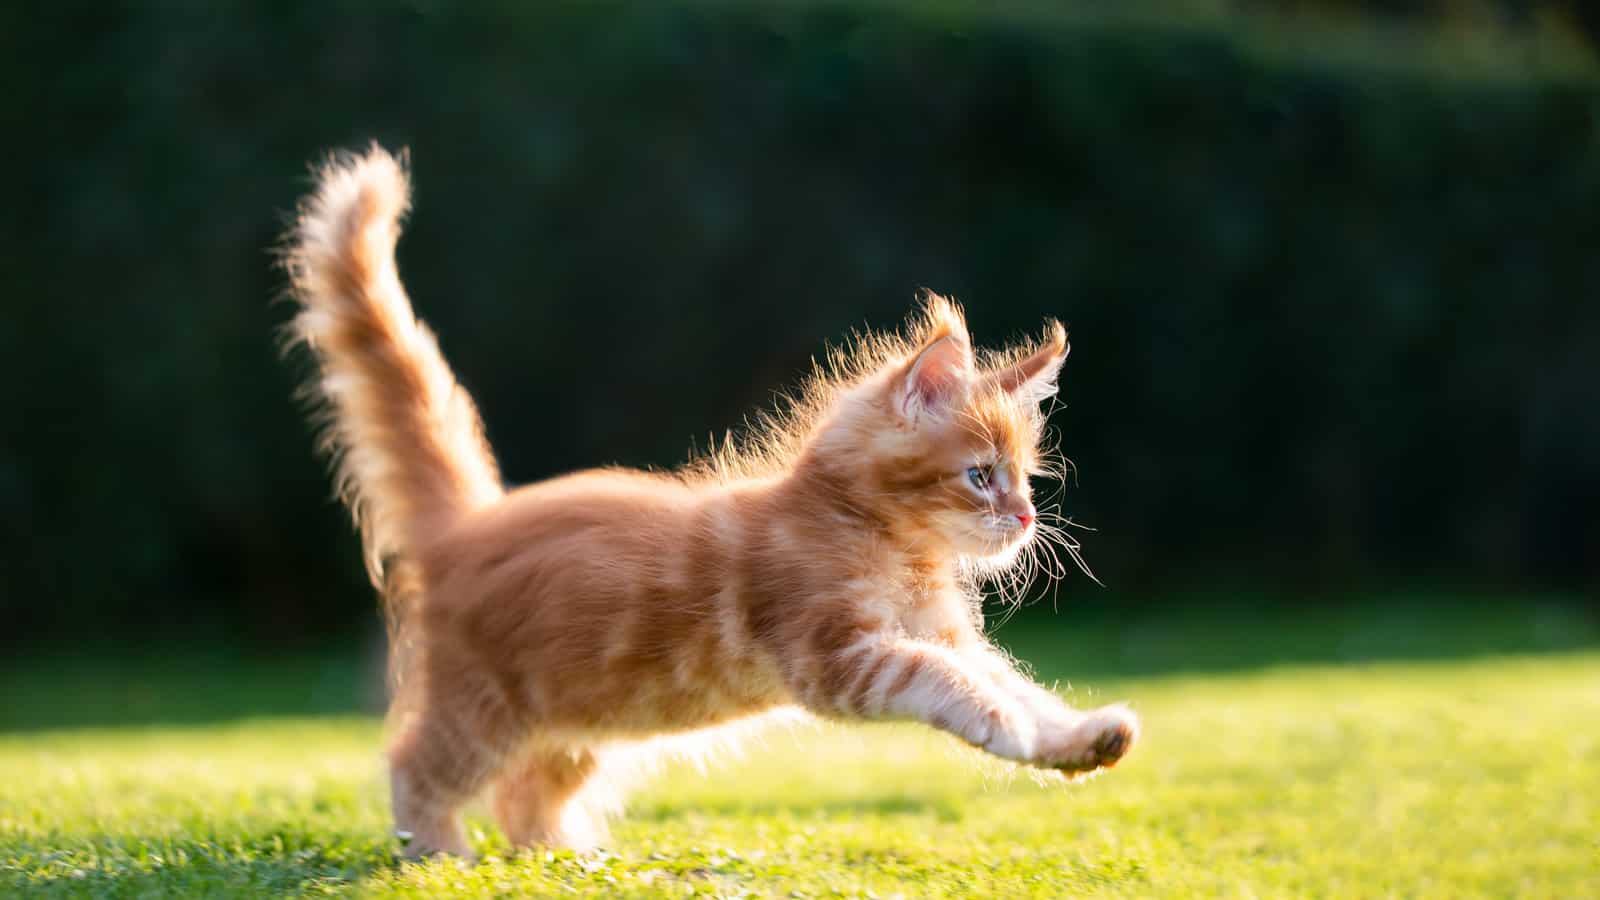 playful red ginger tabby maine coon kitten running on grass outdoors in sunlight
